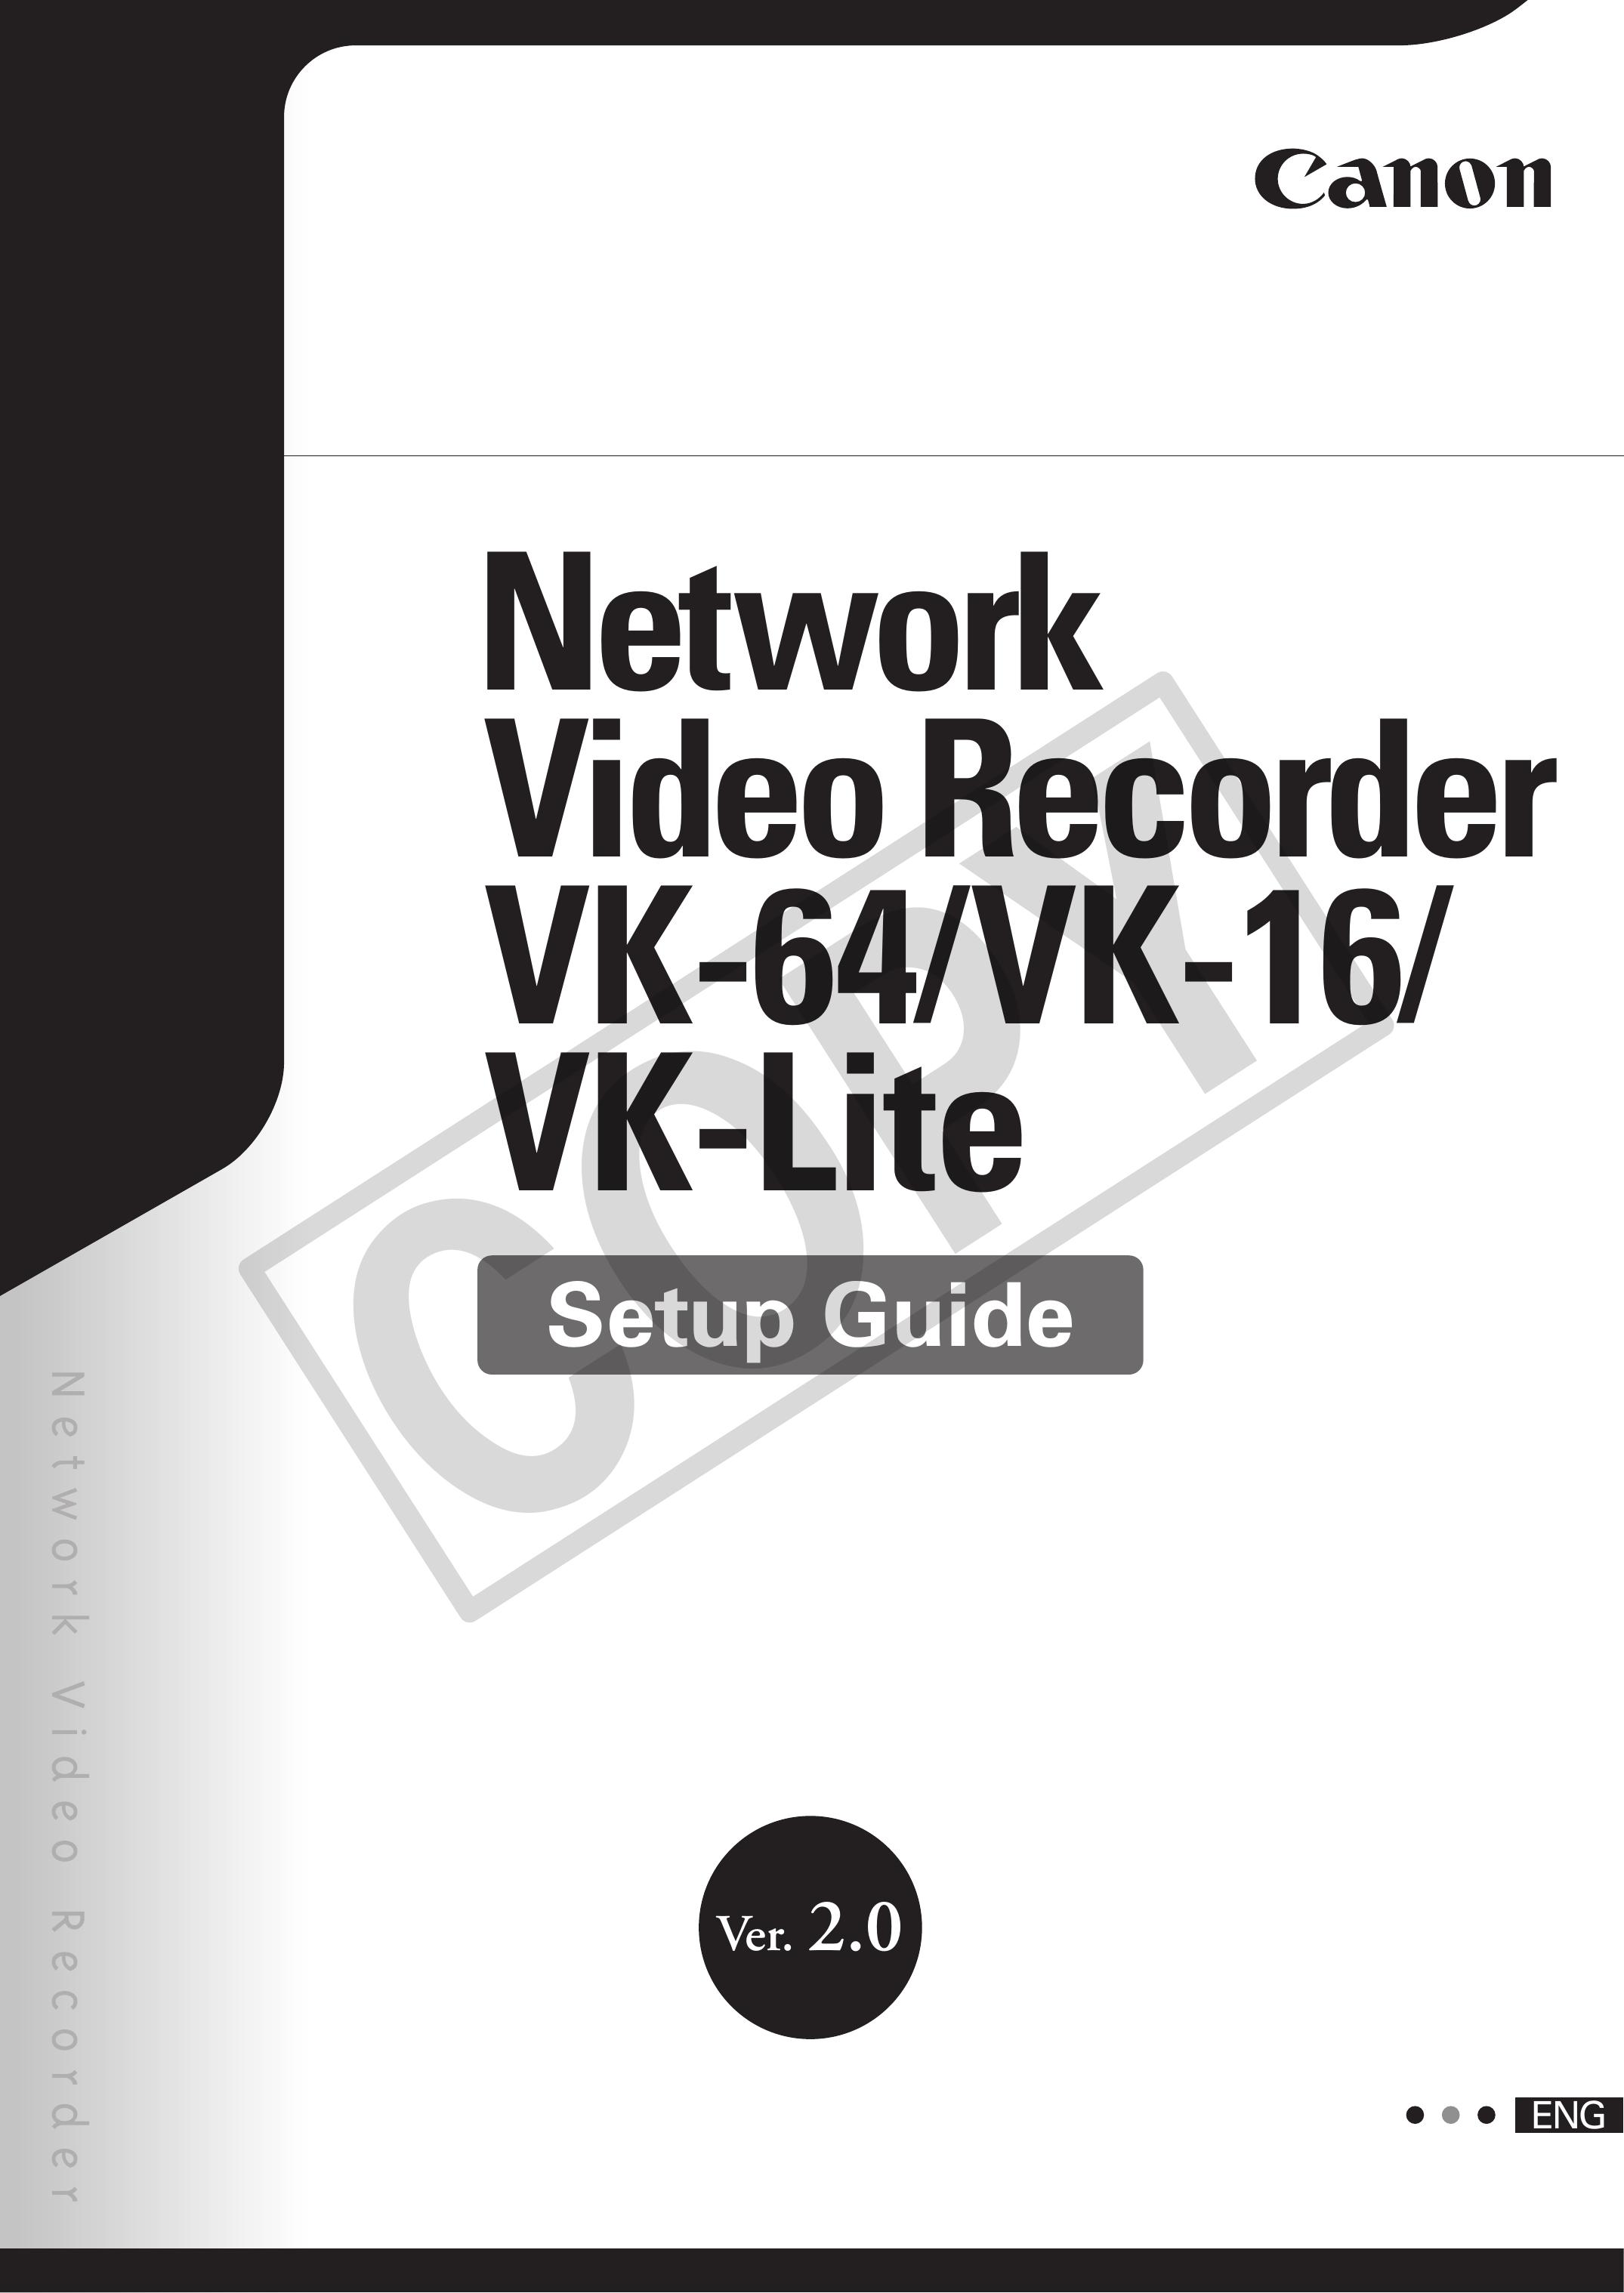 Canon VK-Lite Security Camera User Manual